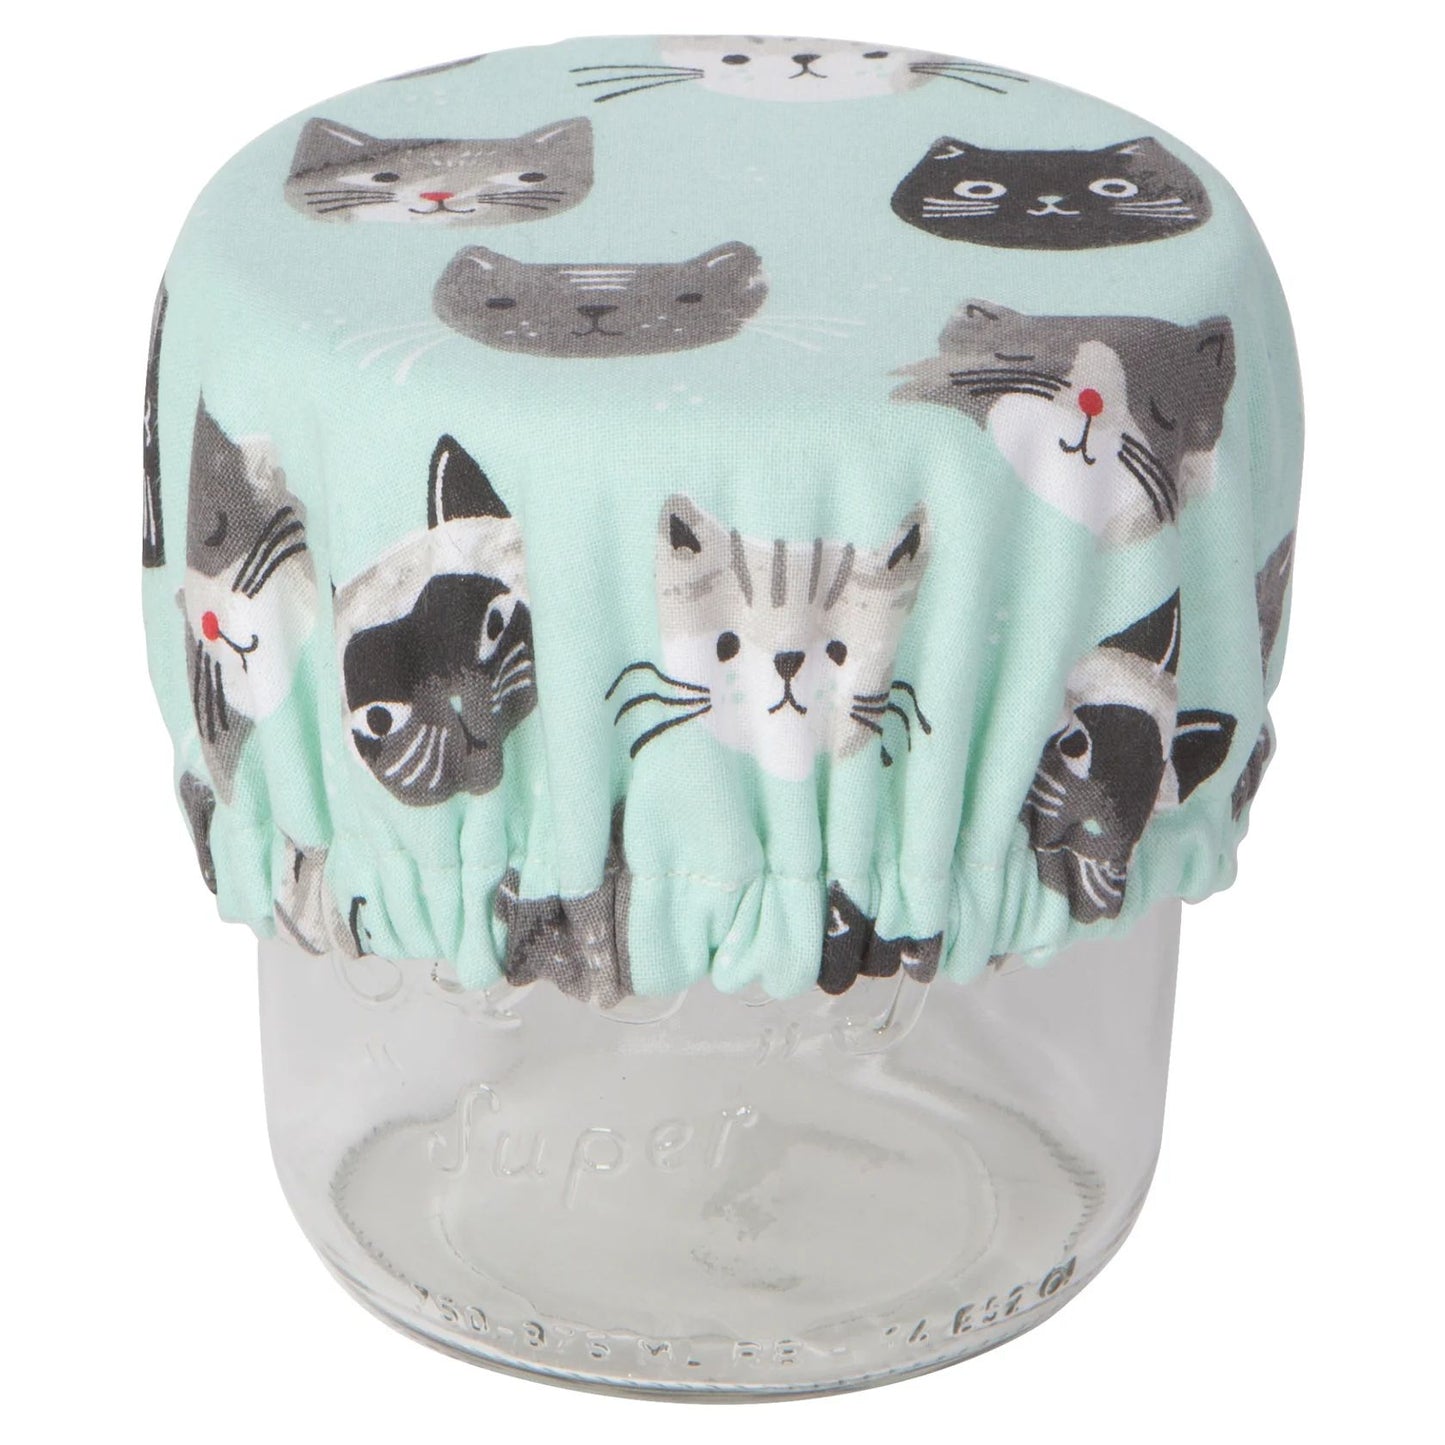 Cats Reusable Mini Bowl Cover | Cute Bowl Cap